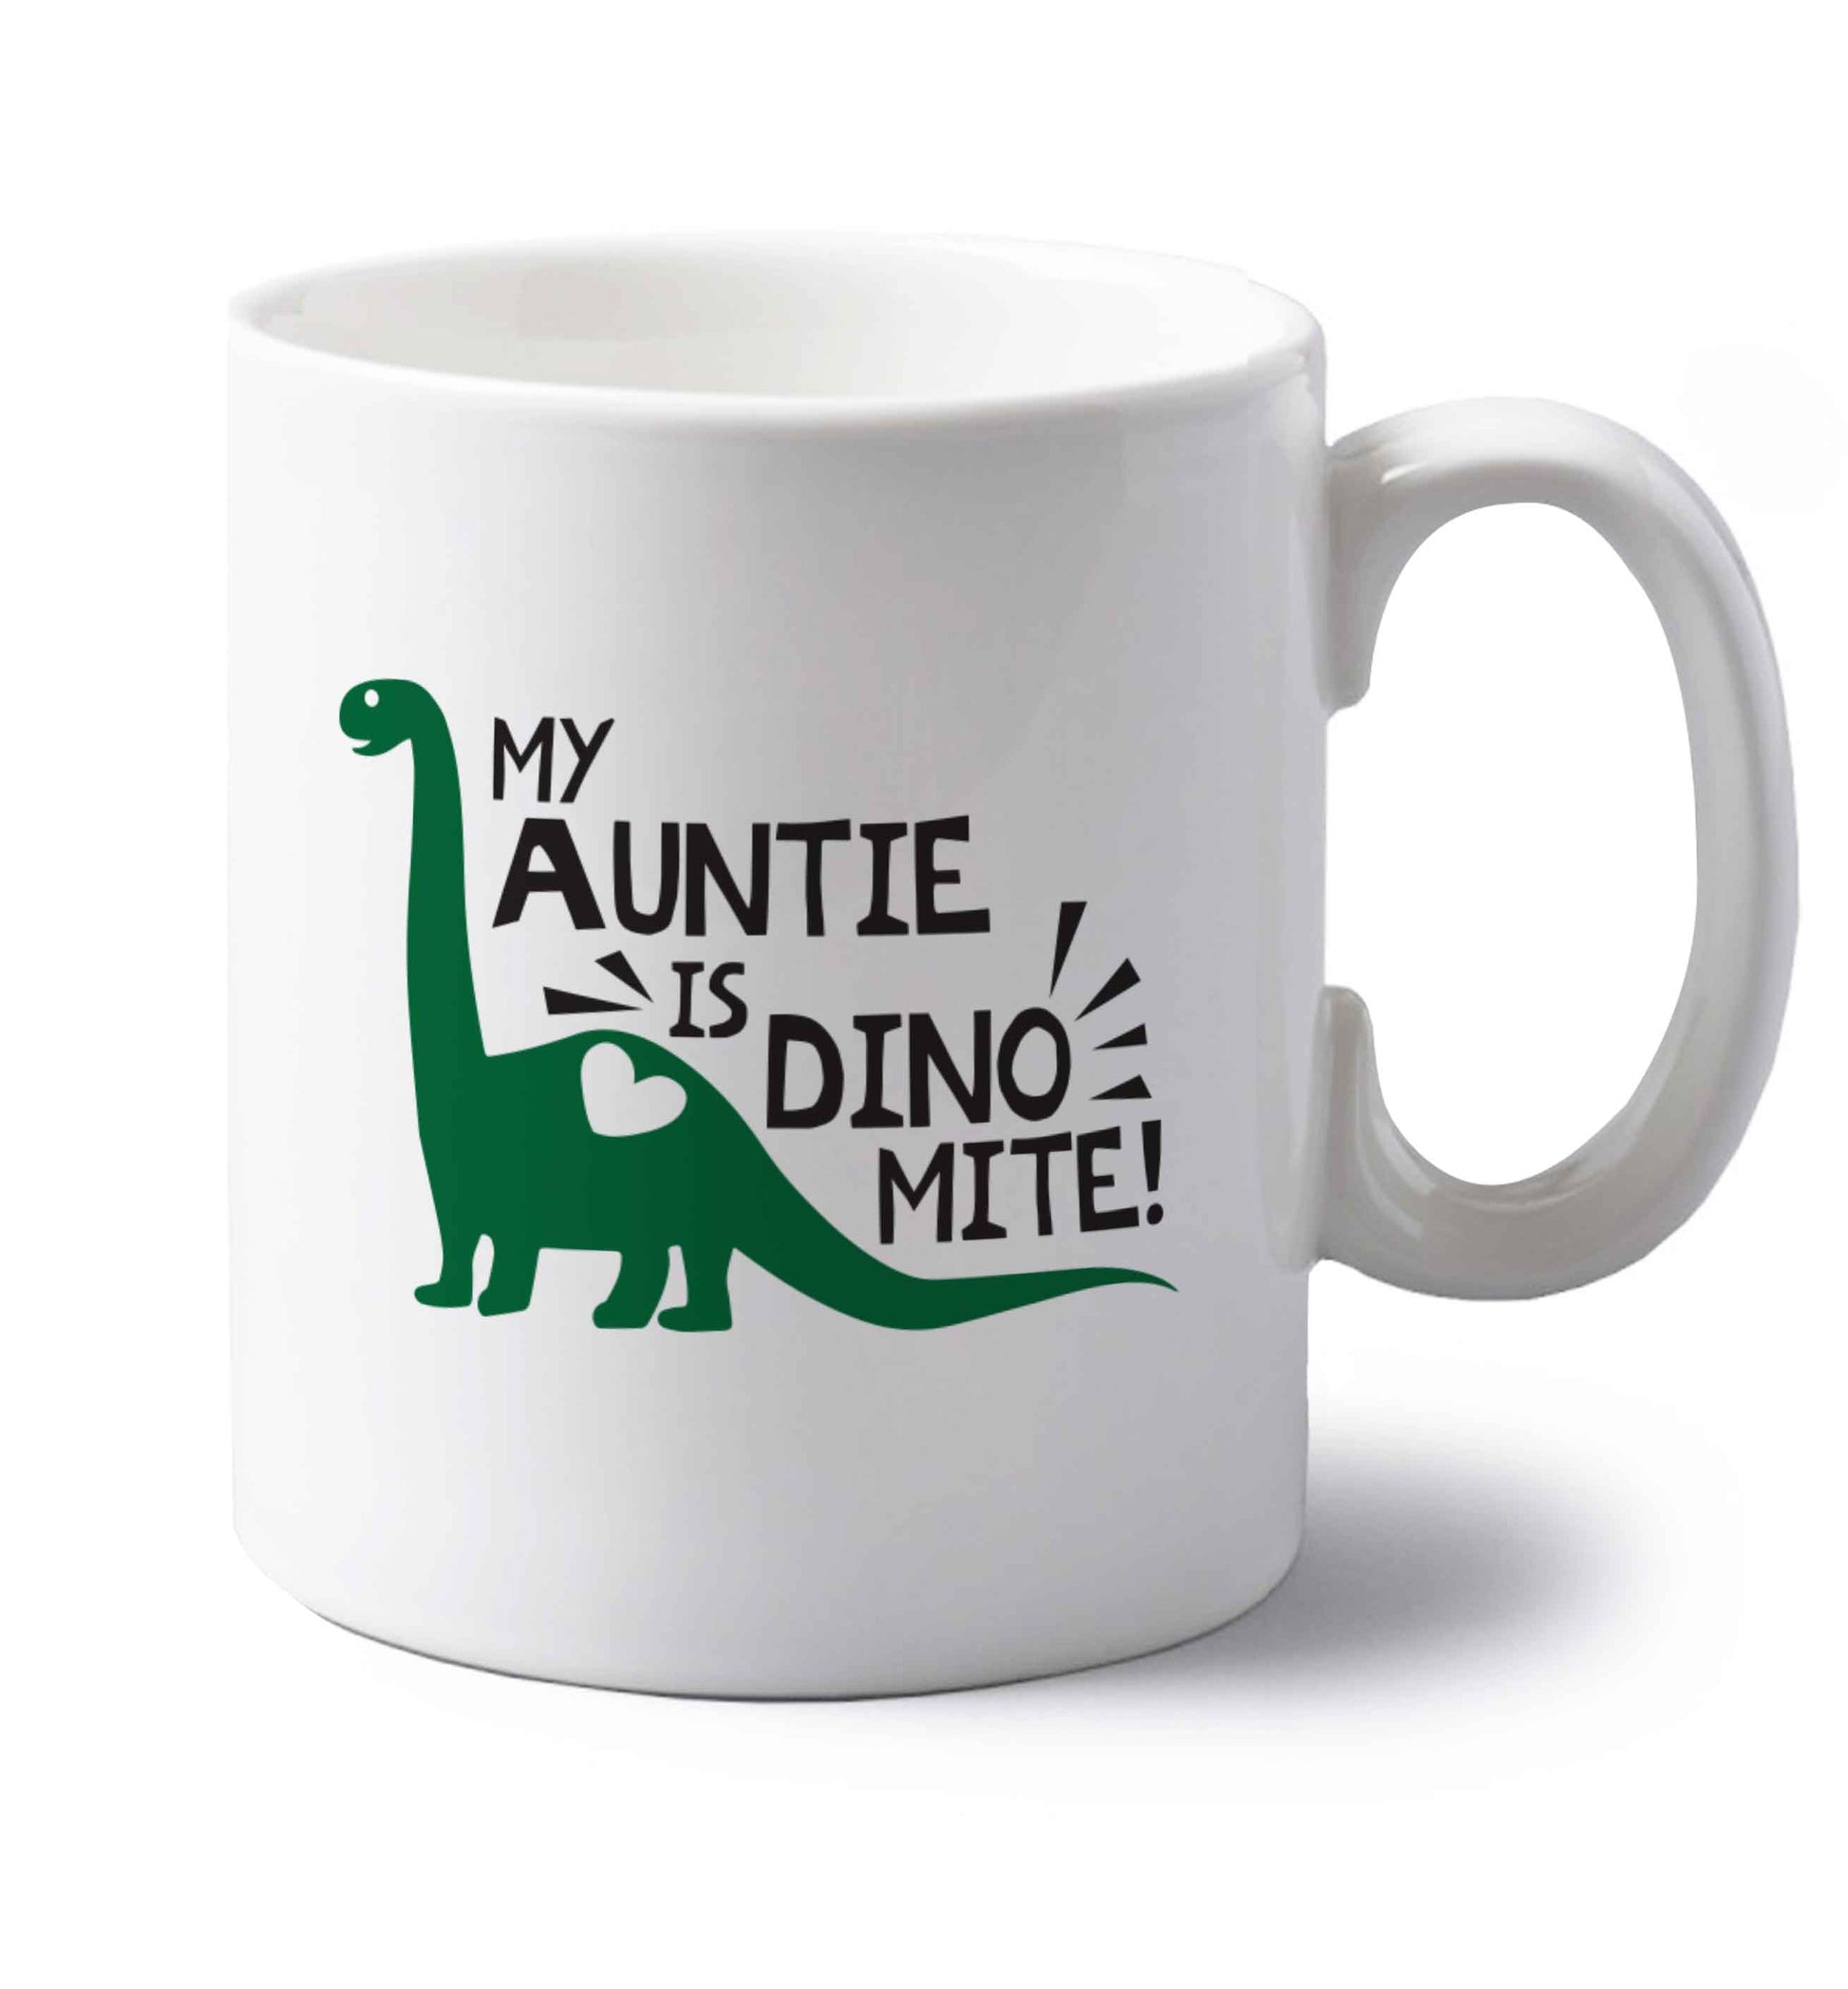 My auntie is dinomite! left handed white ceramic mug 